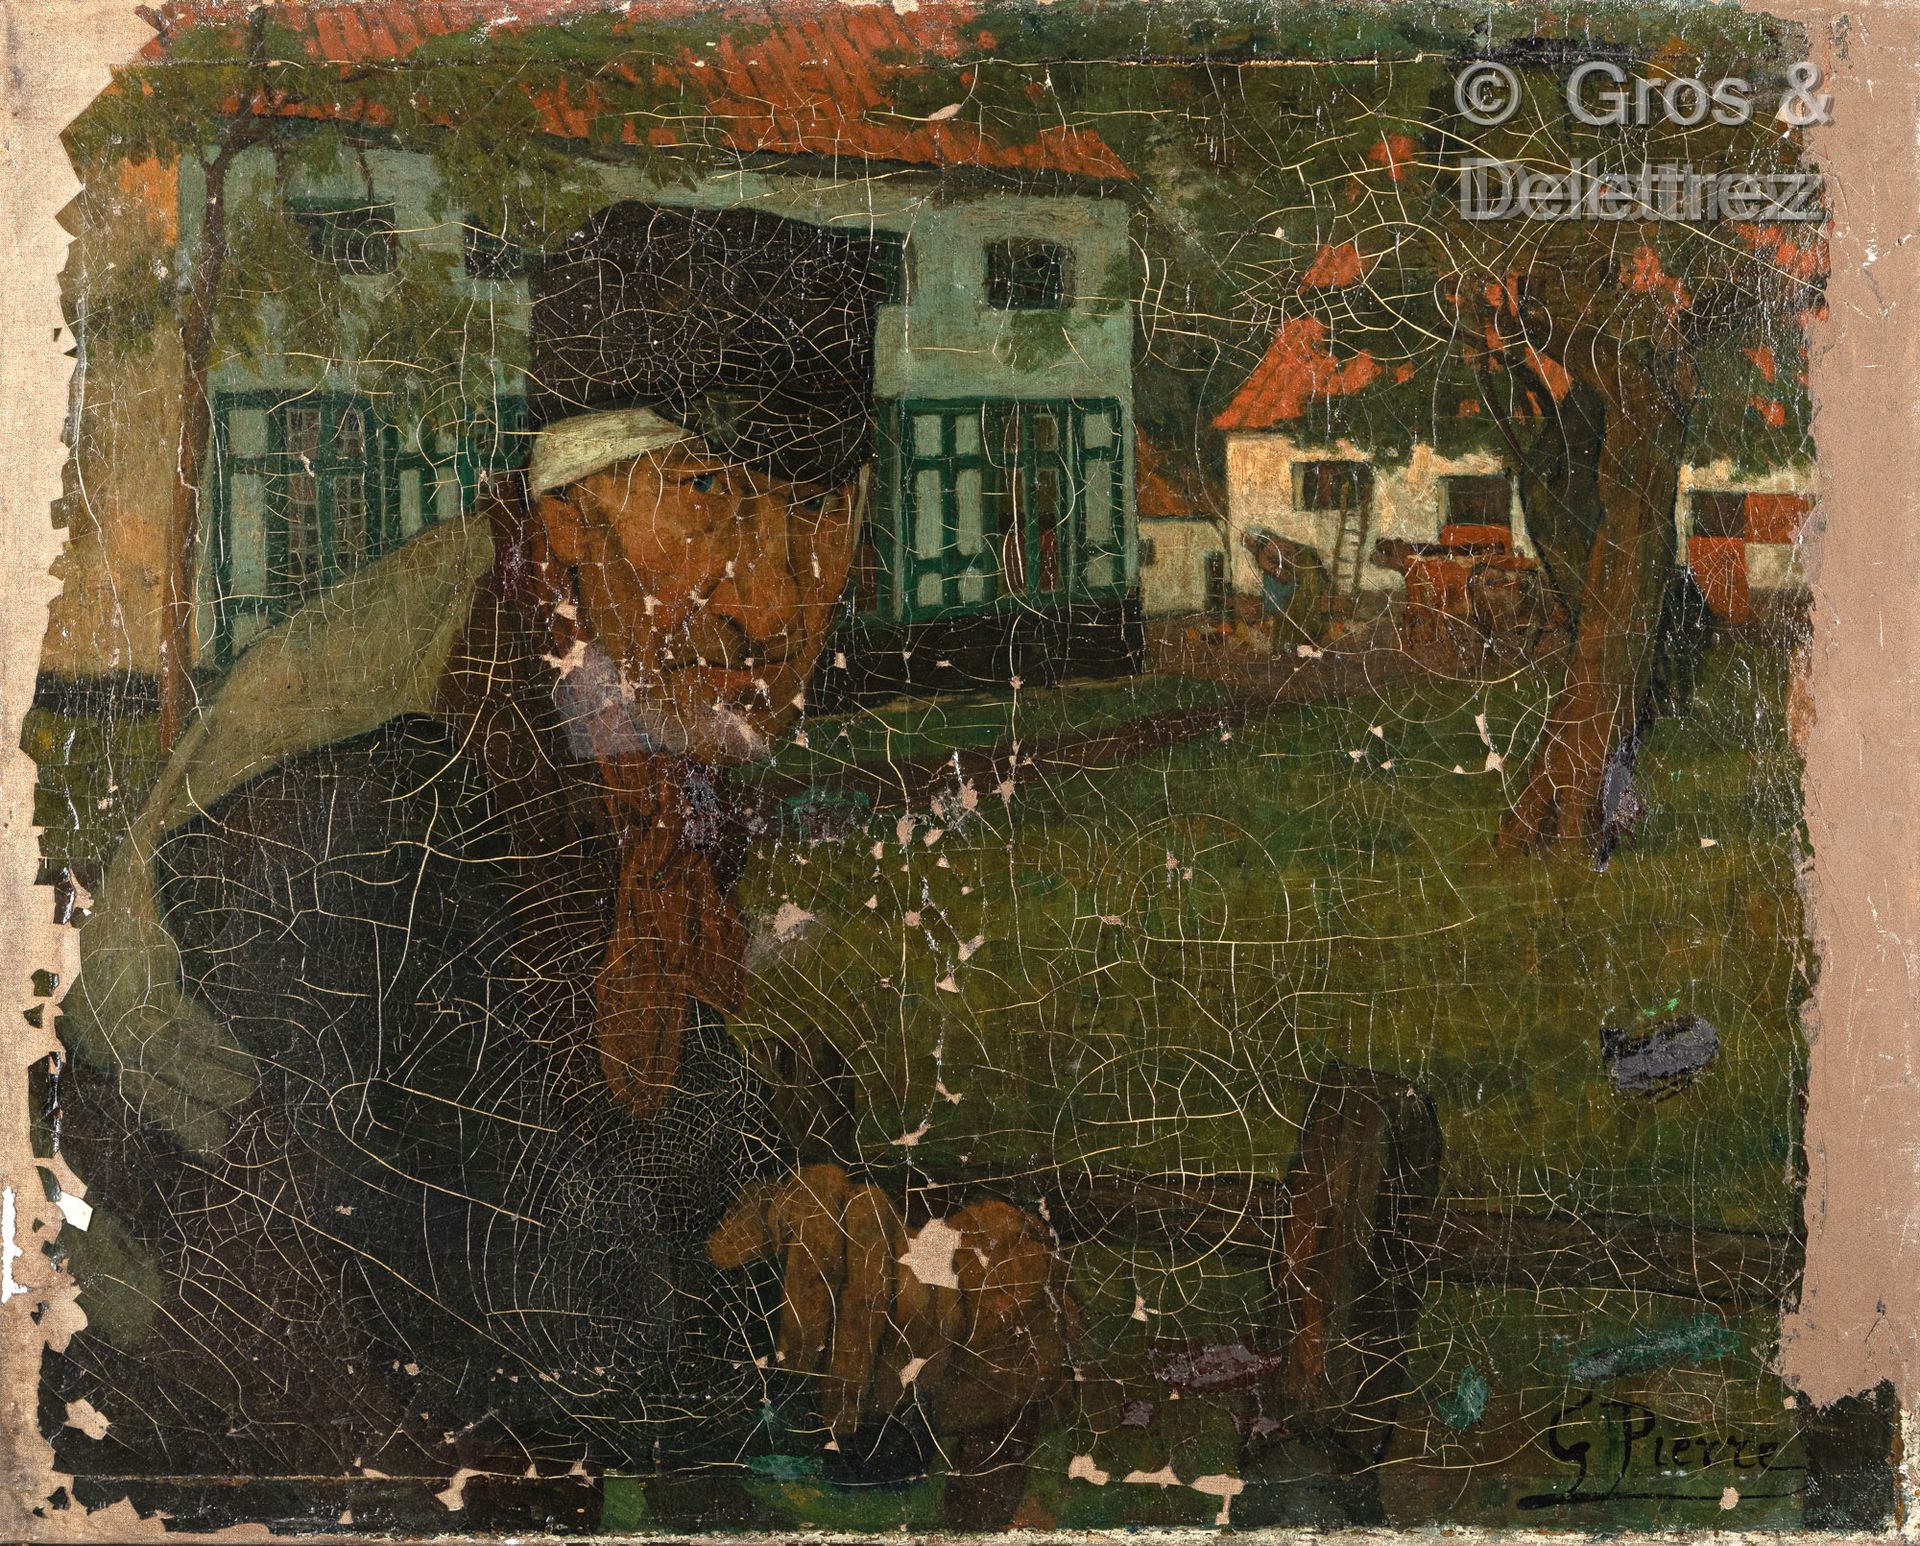 Null 古斯塔夫-勒内-皮埃尔 (1875-1939)

农场前戴帽子的人的画像

布面油画，右下角有签名

65 x 82 cm. 

非常重要的缺失